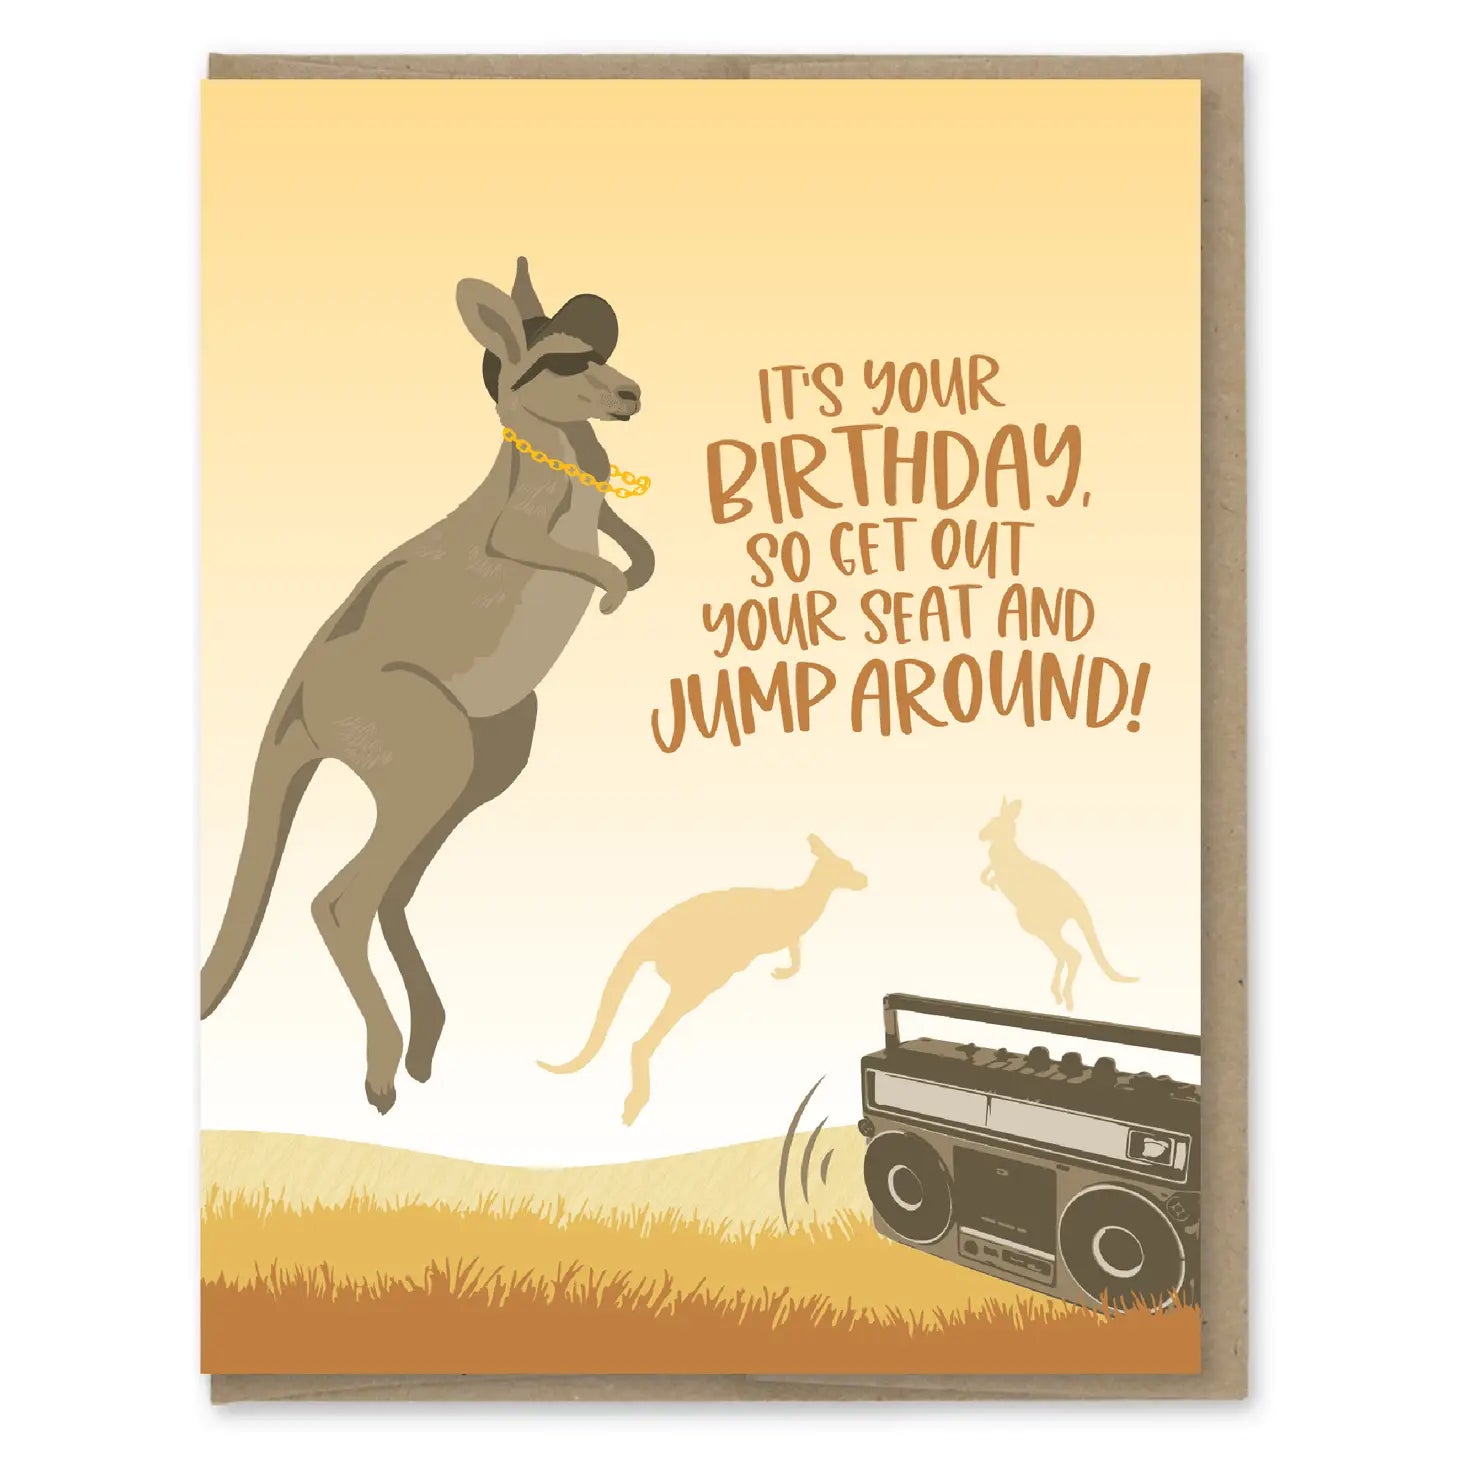 Jump Around - Greeting Card